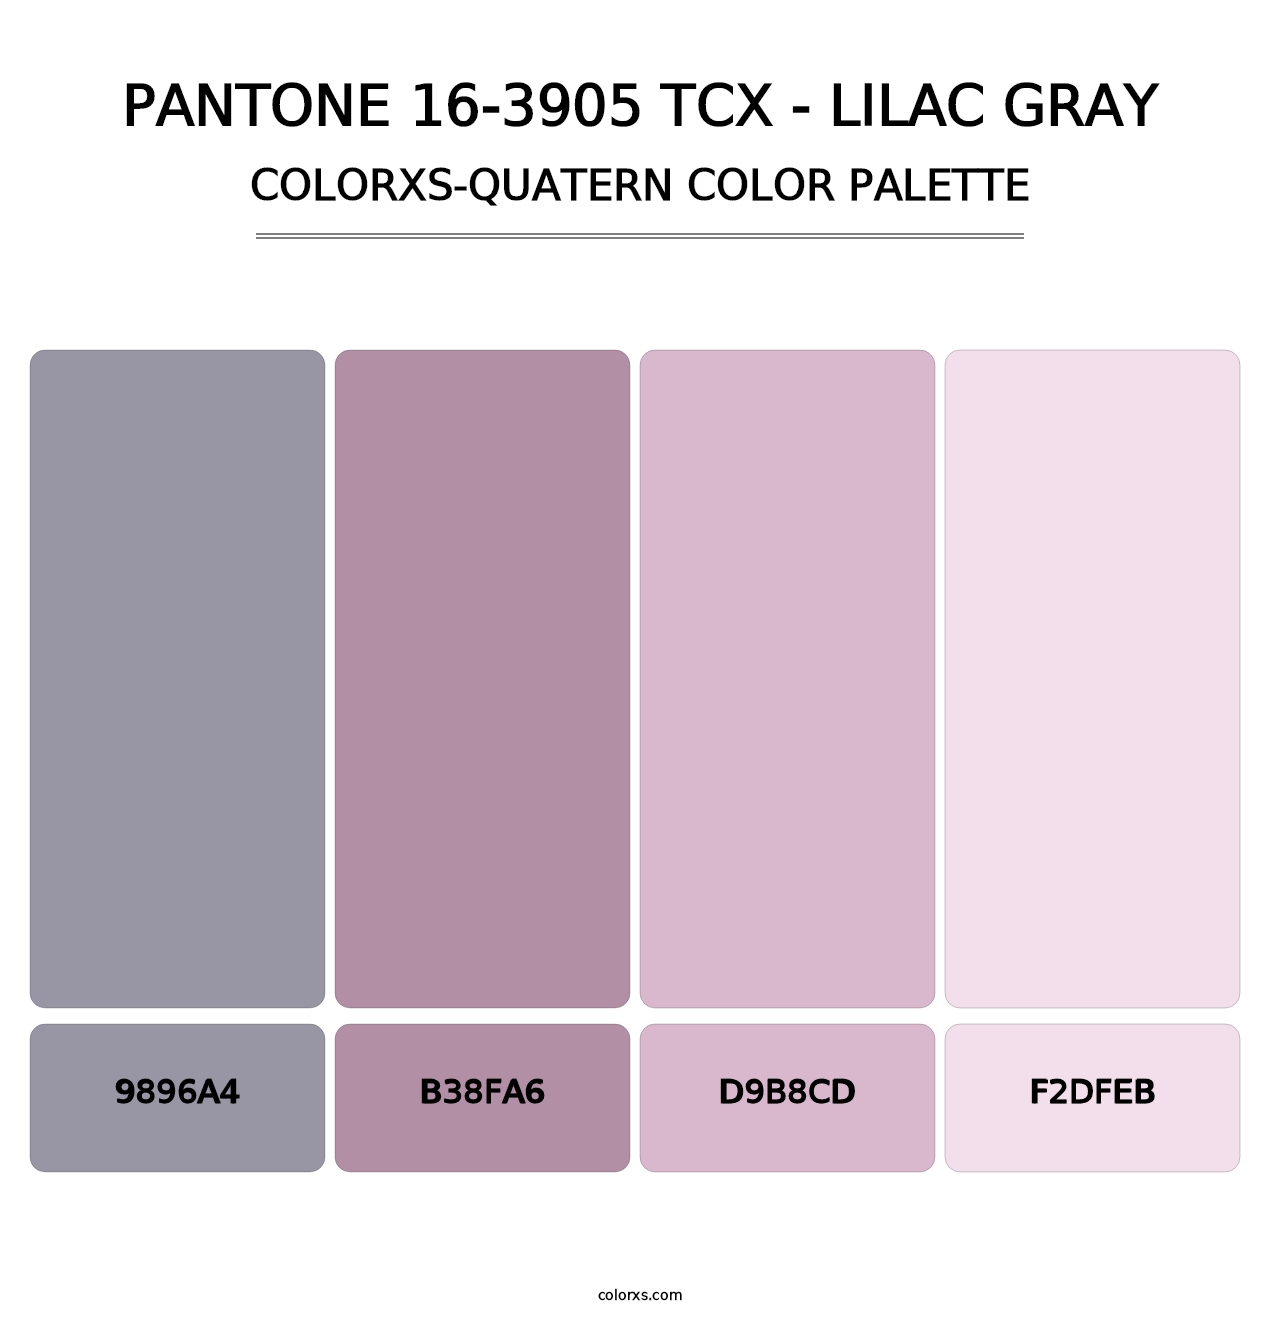 PANTONE 16-3905 TCX - Lilac Gray - Colorxs Quatern Palette